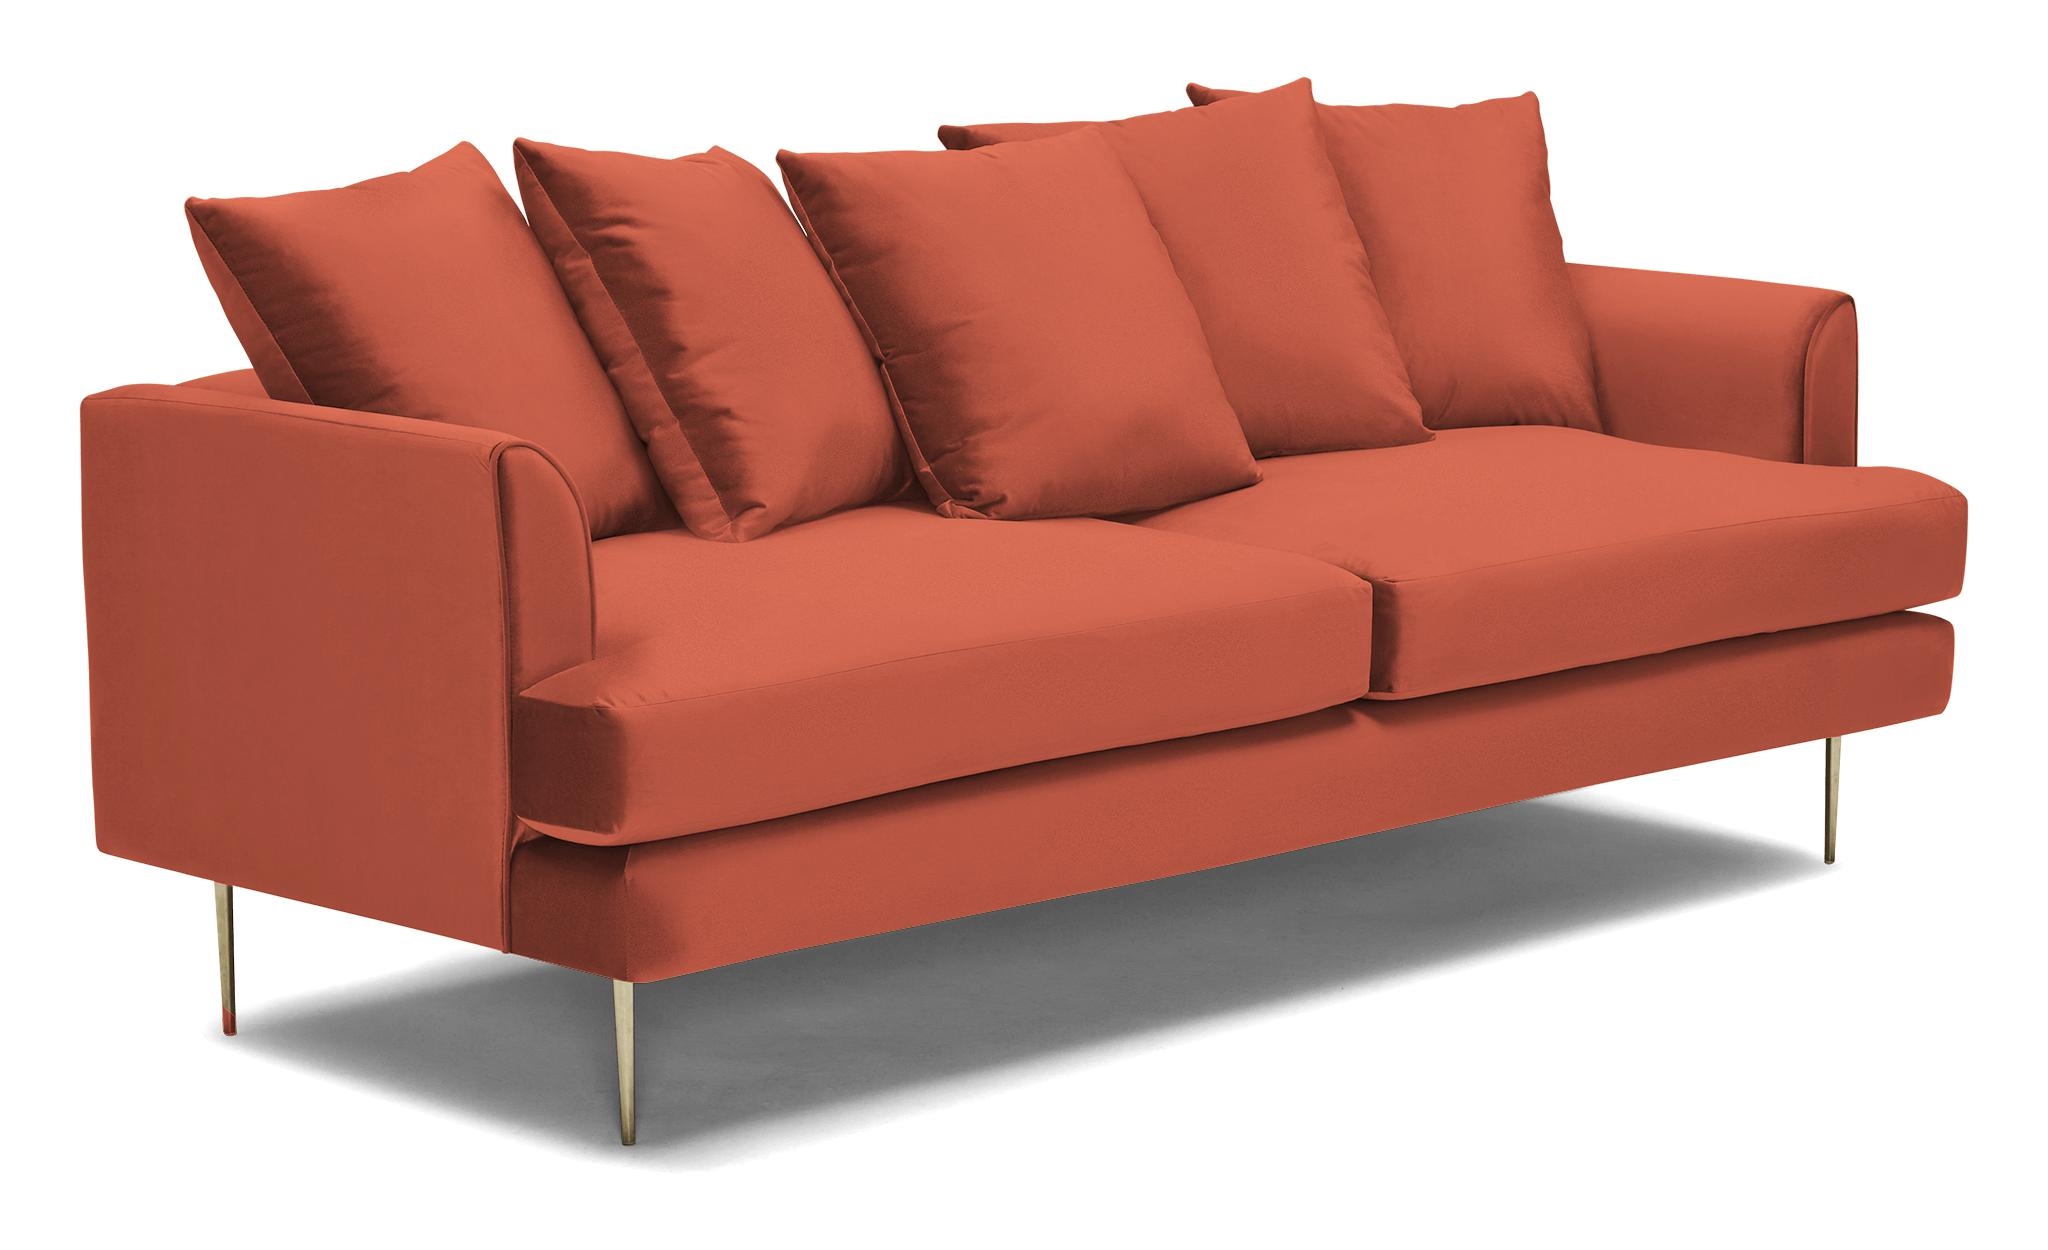 Orange Aime Mid Century Modern Sofa - Key Largo Coral - Image 1